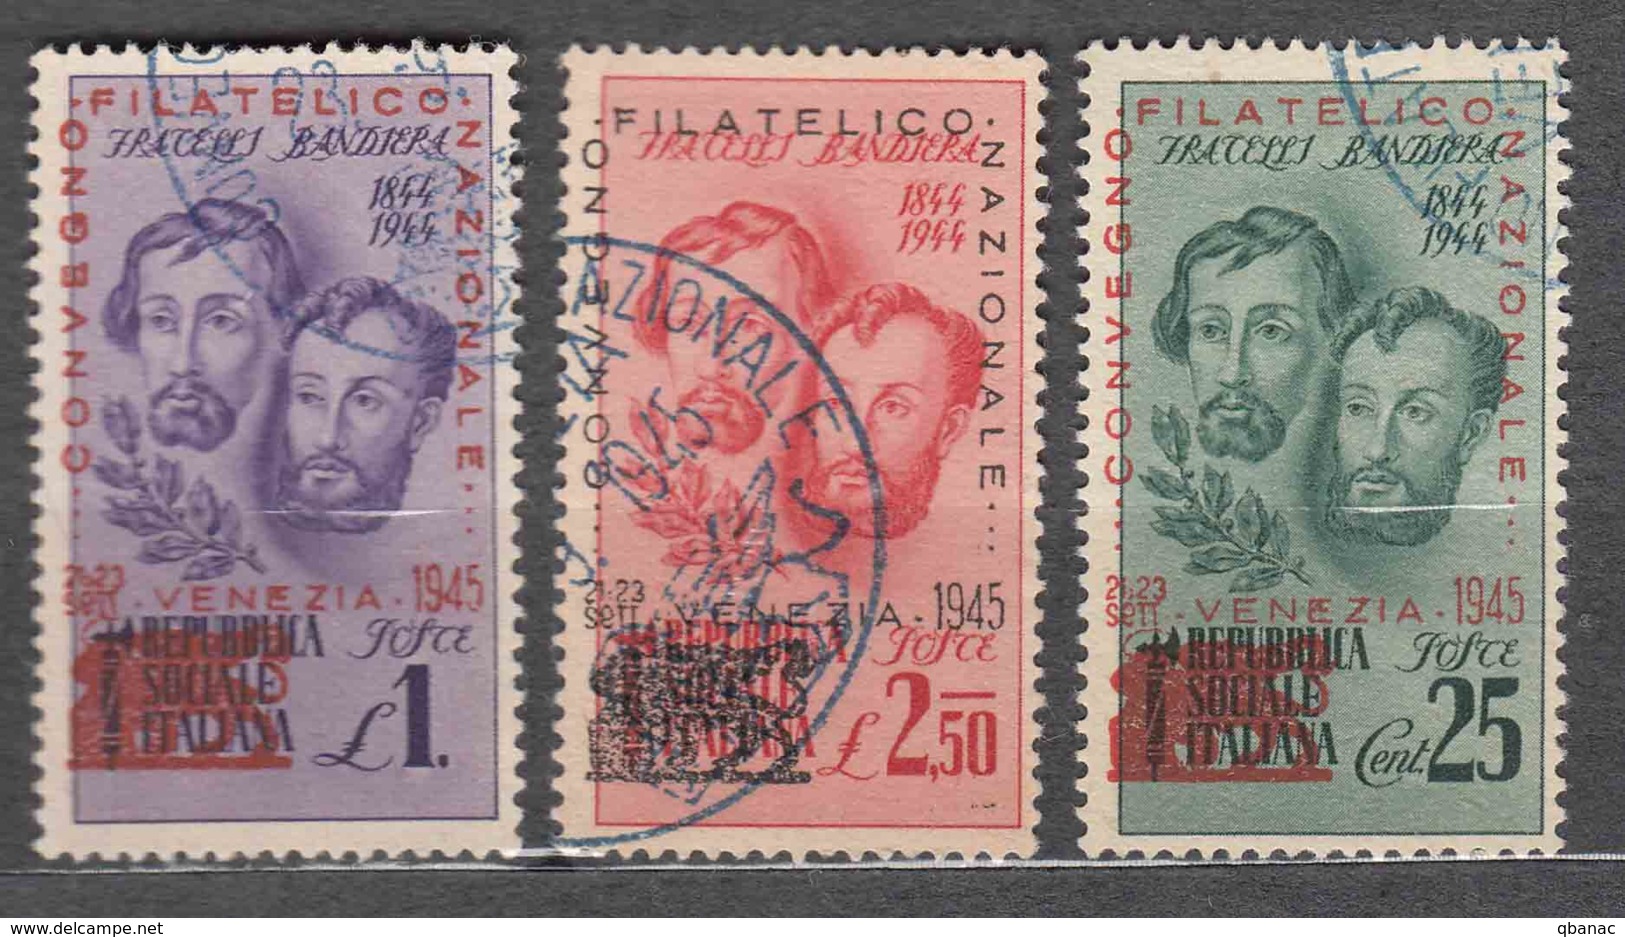 Italy 1945, Philatelic Exibition Venezia Stamps Overprint, Fratelli Bandiera, Used - Used